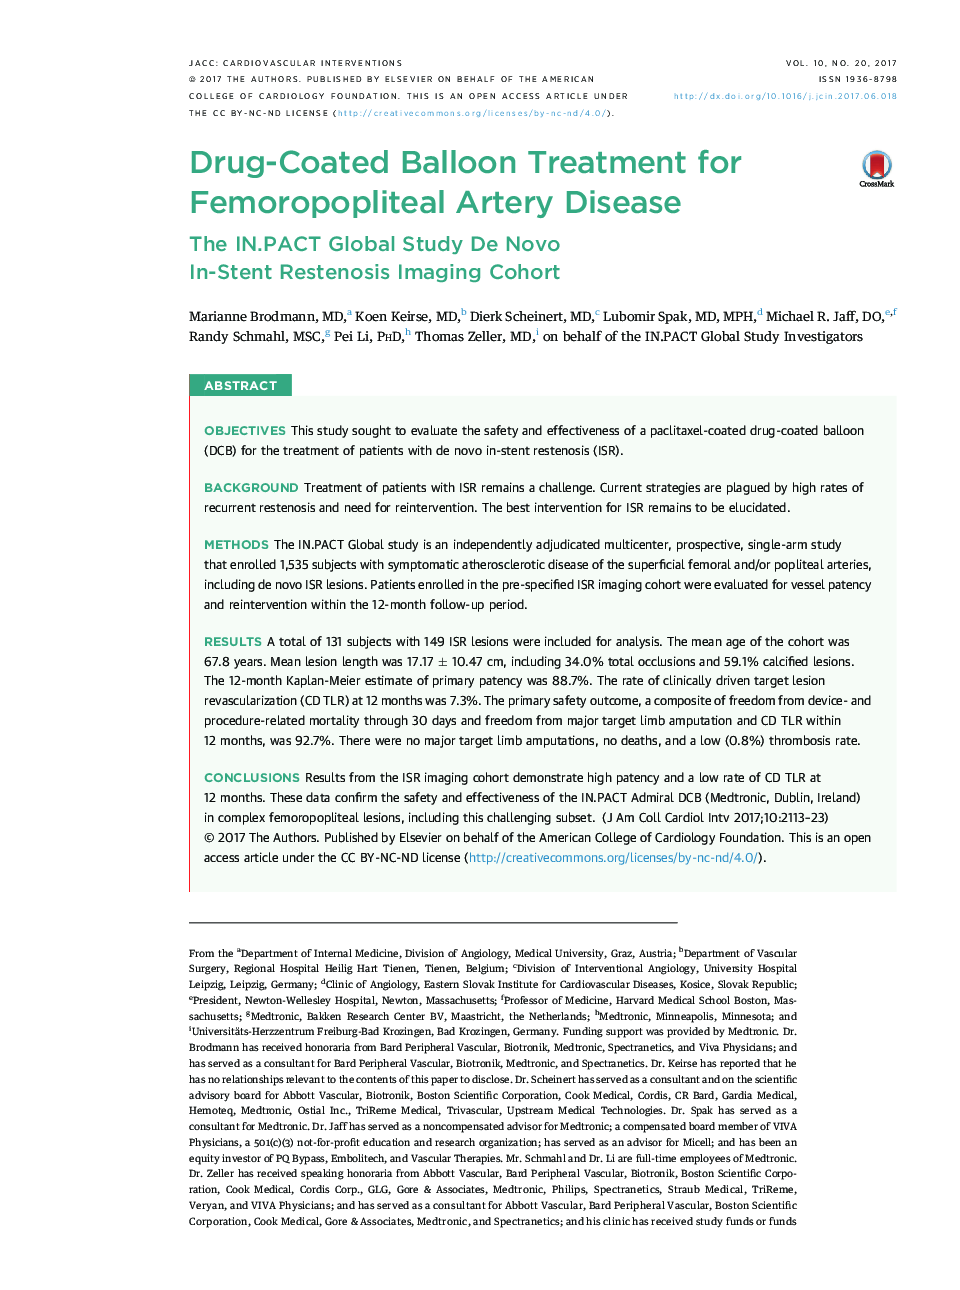 Drug-Coated Balloon Treatment for Femoropopliteal Artery Disease